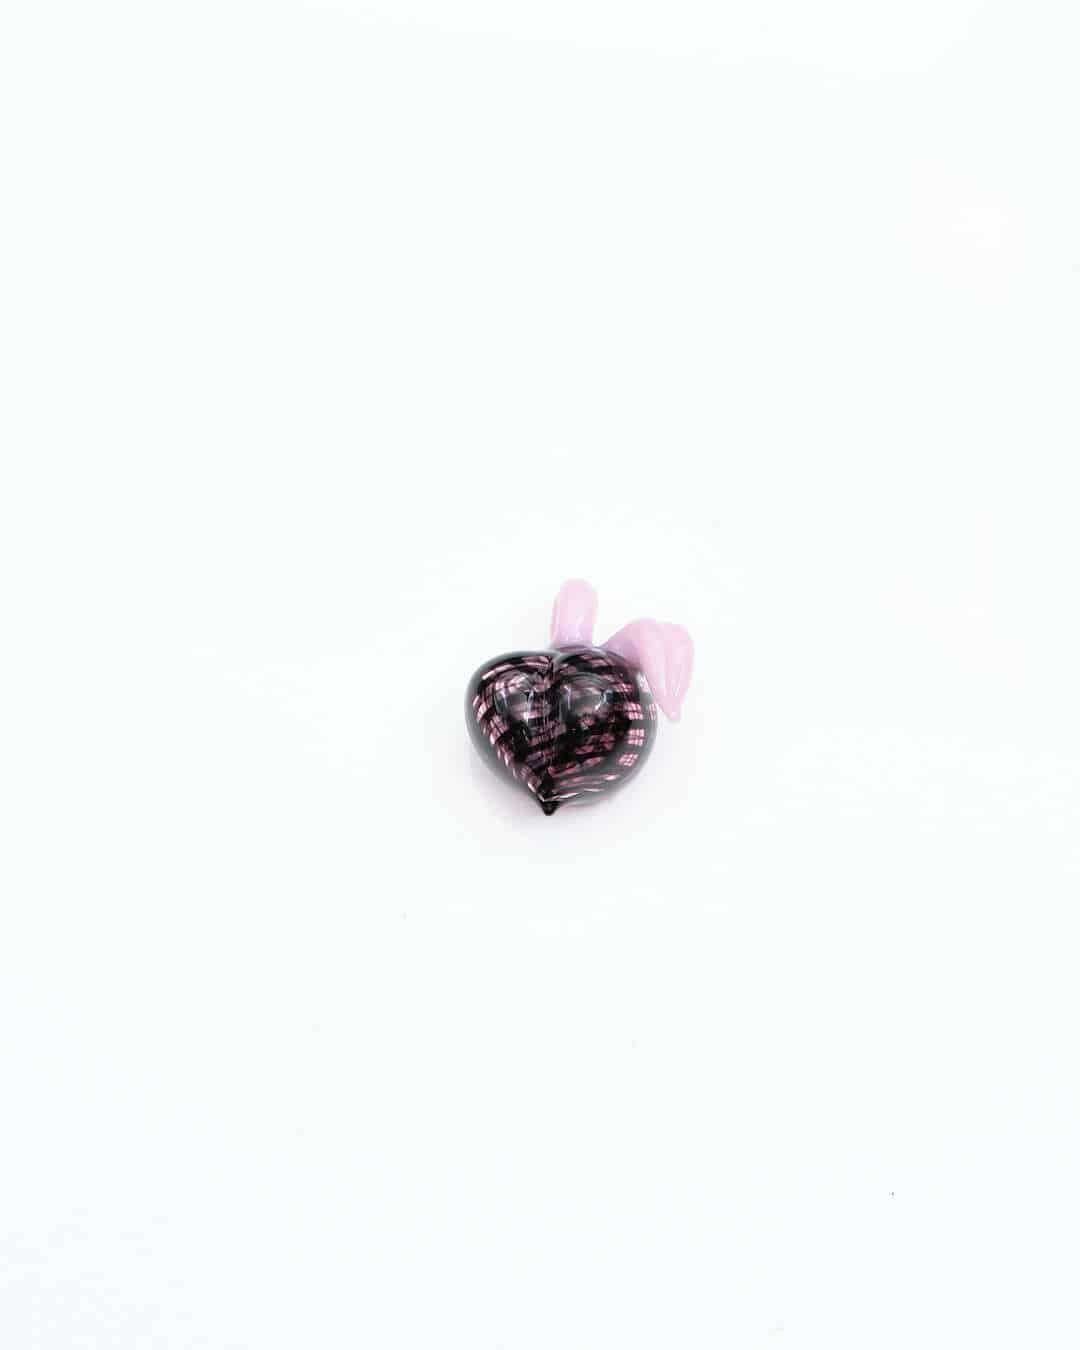 luxurious glass pendant - (24C) Pink & Black Reticello Peach Pendant by Gnarla Carla